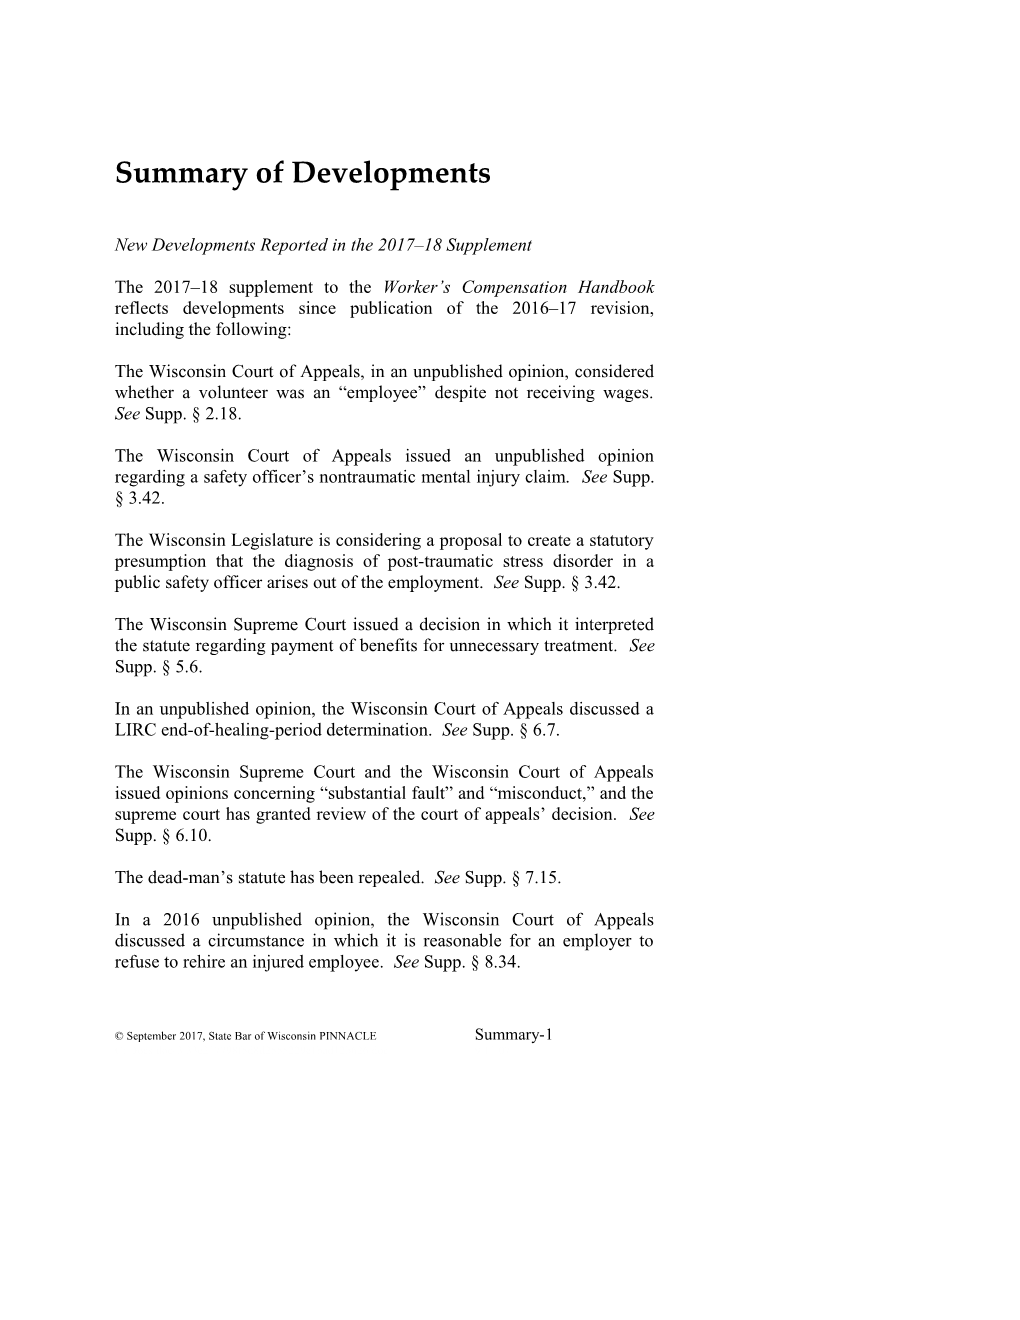 AK0092 Summary of Developments